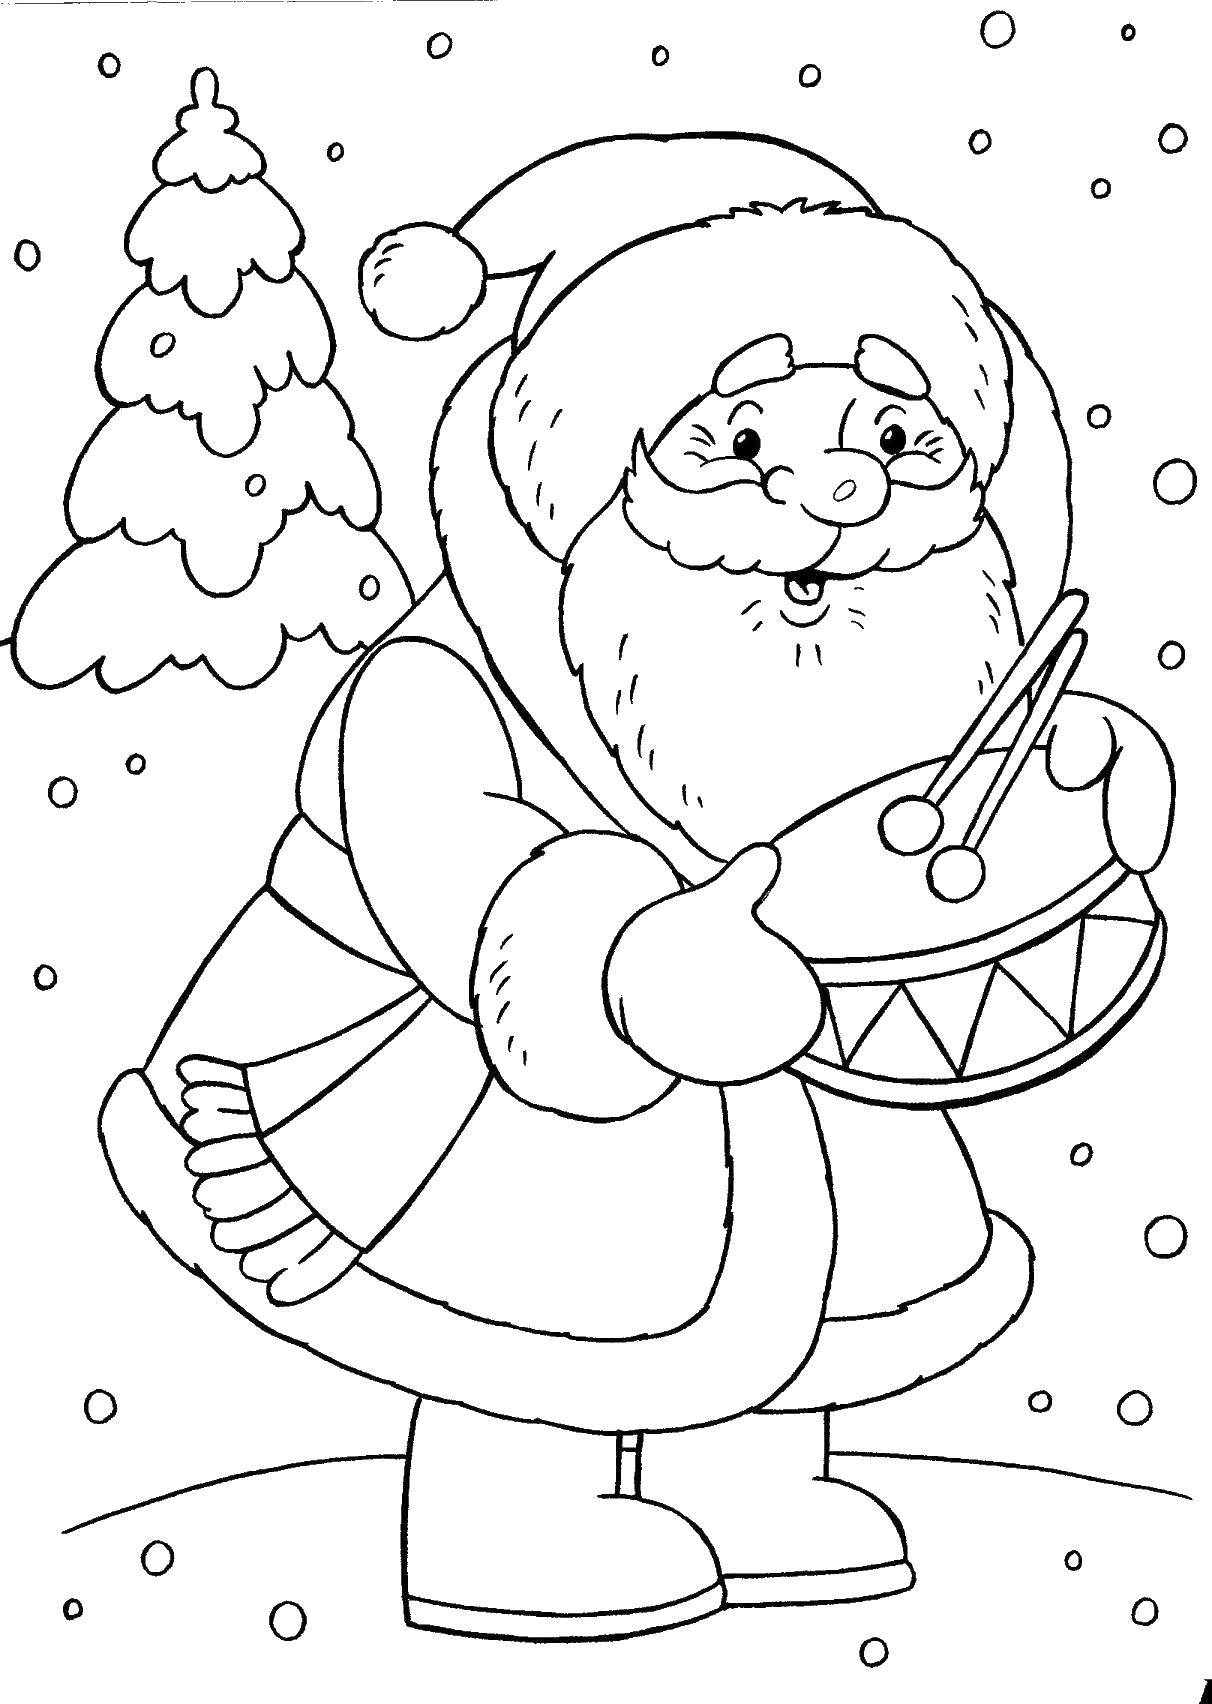 Coloring Santa Claus with drum. Category Santa Claus. Tags:  Santa Claus, drum.